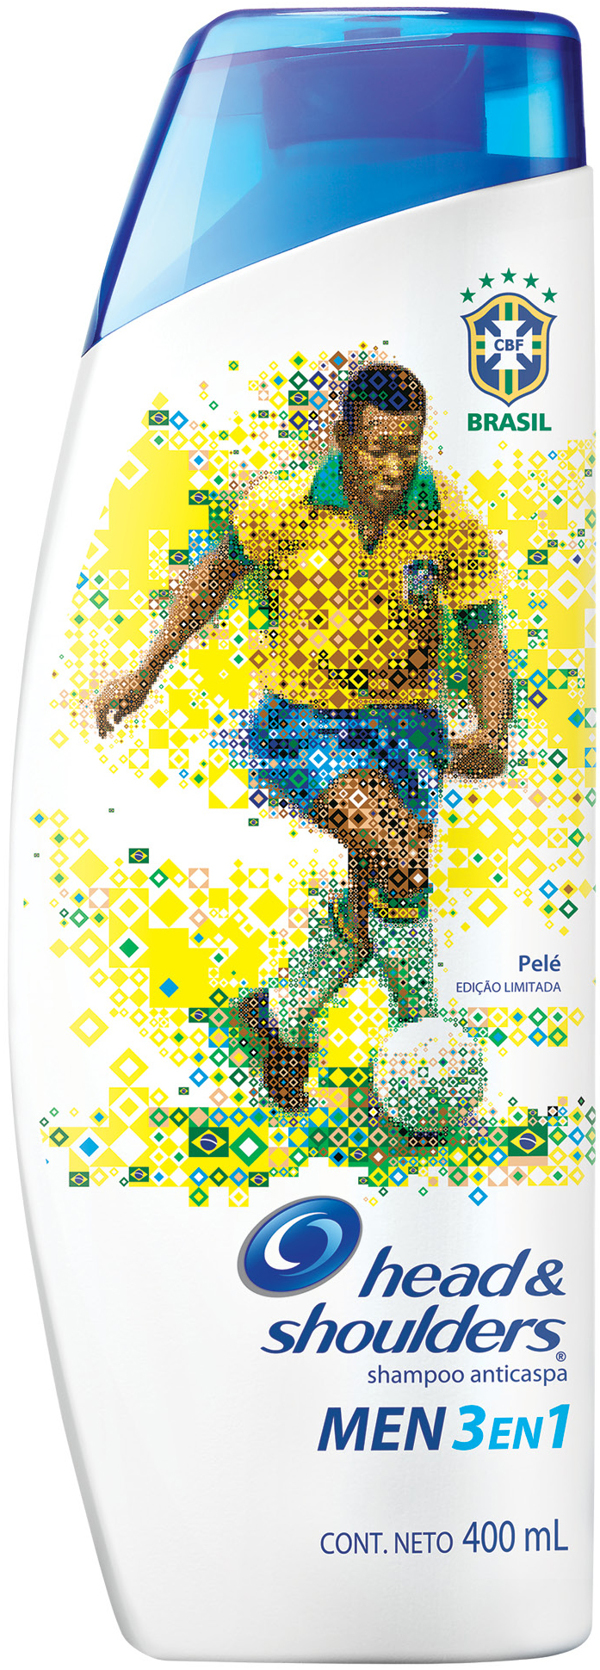 2014 world cup head.jpg